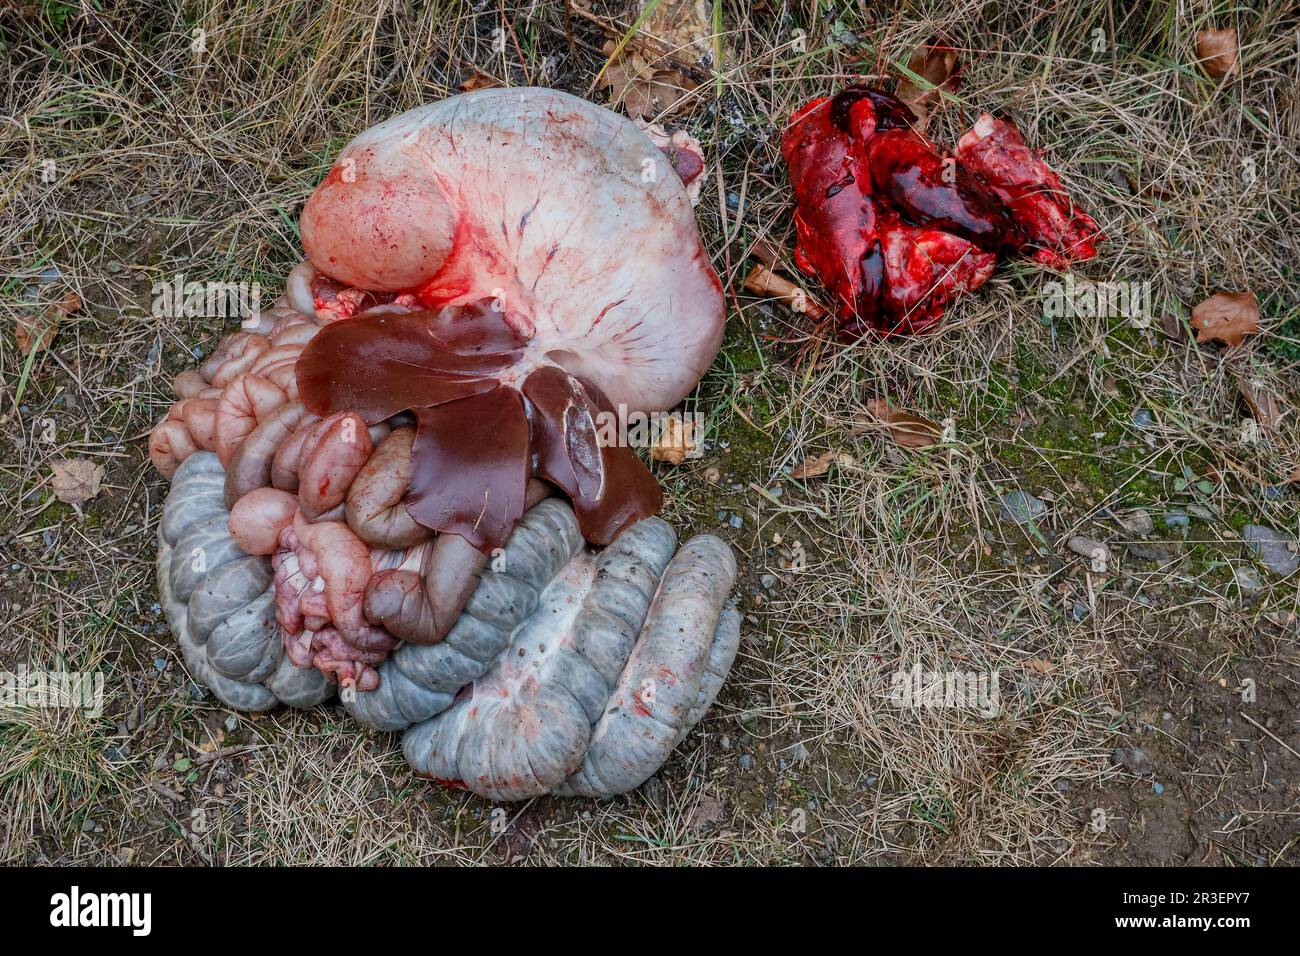 Breakup of hunted game internal organs Stock Photo